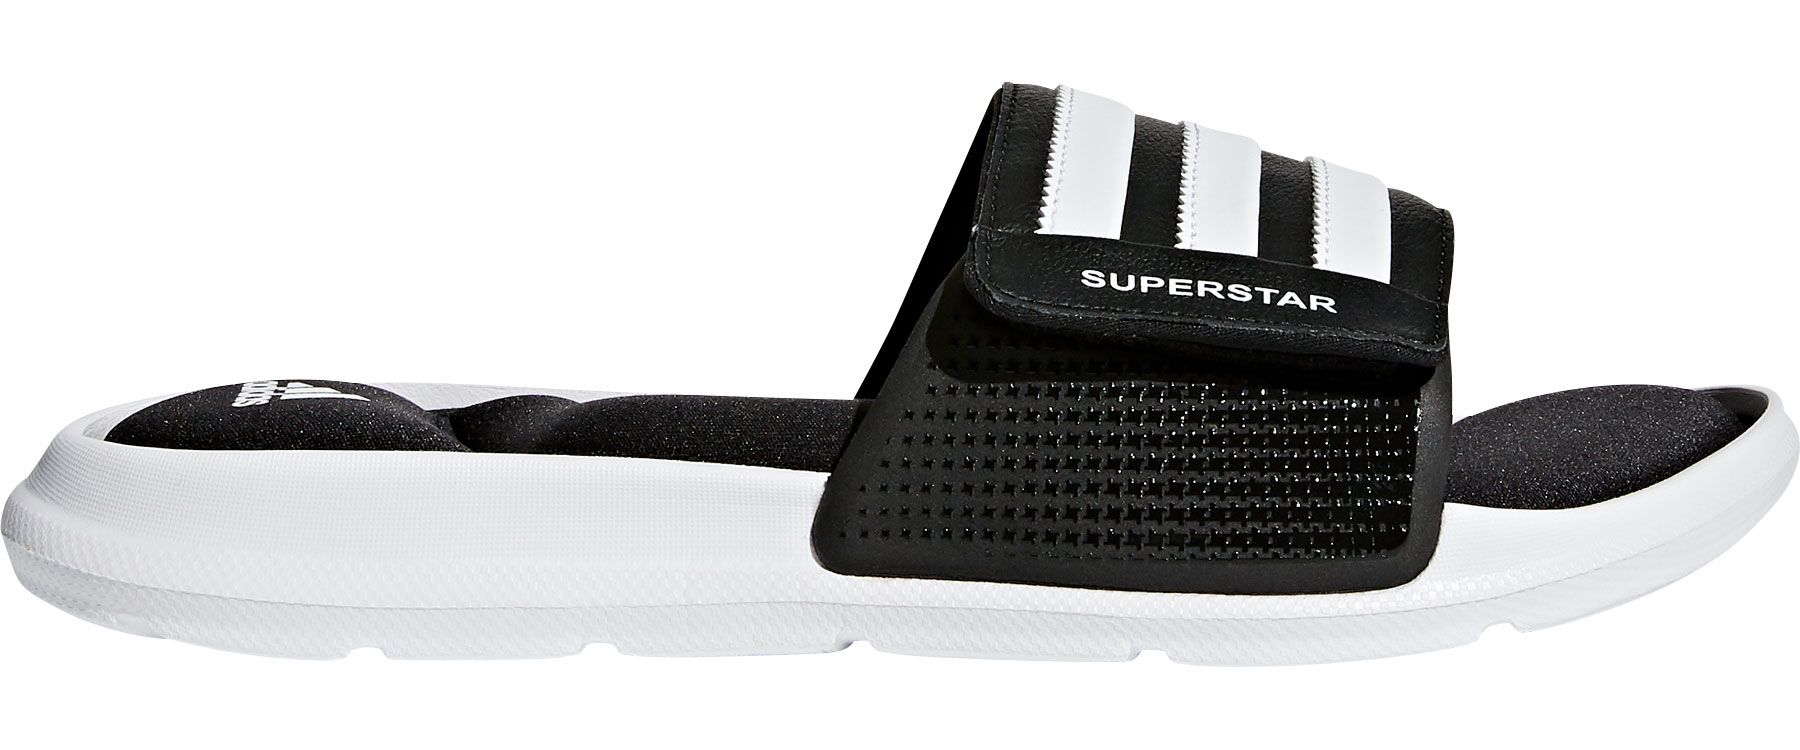 adidas 5g superstar slides